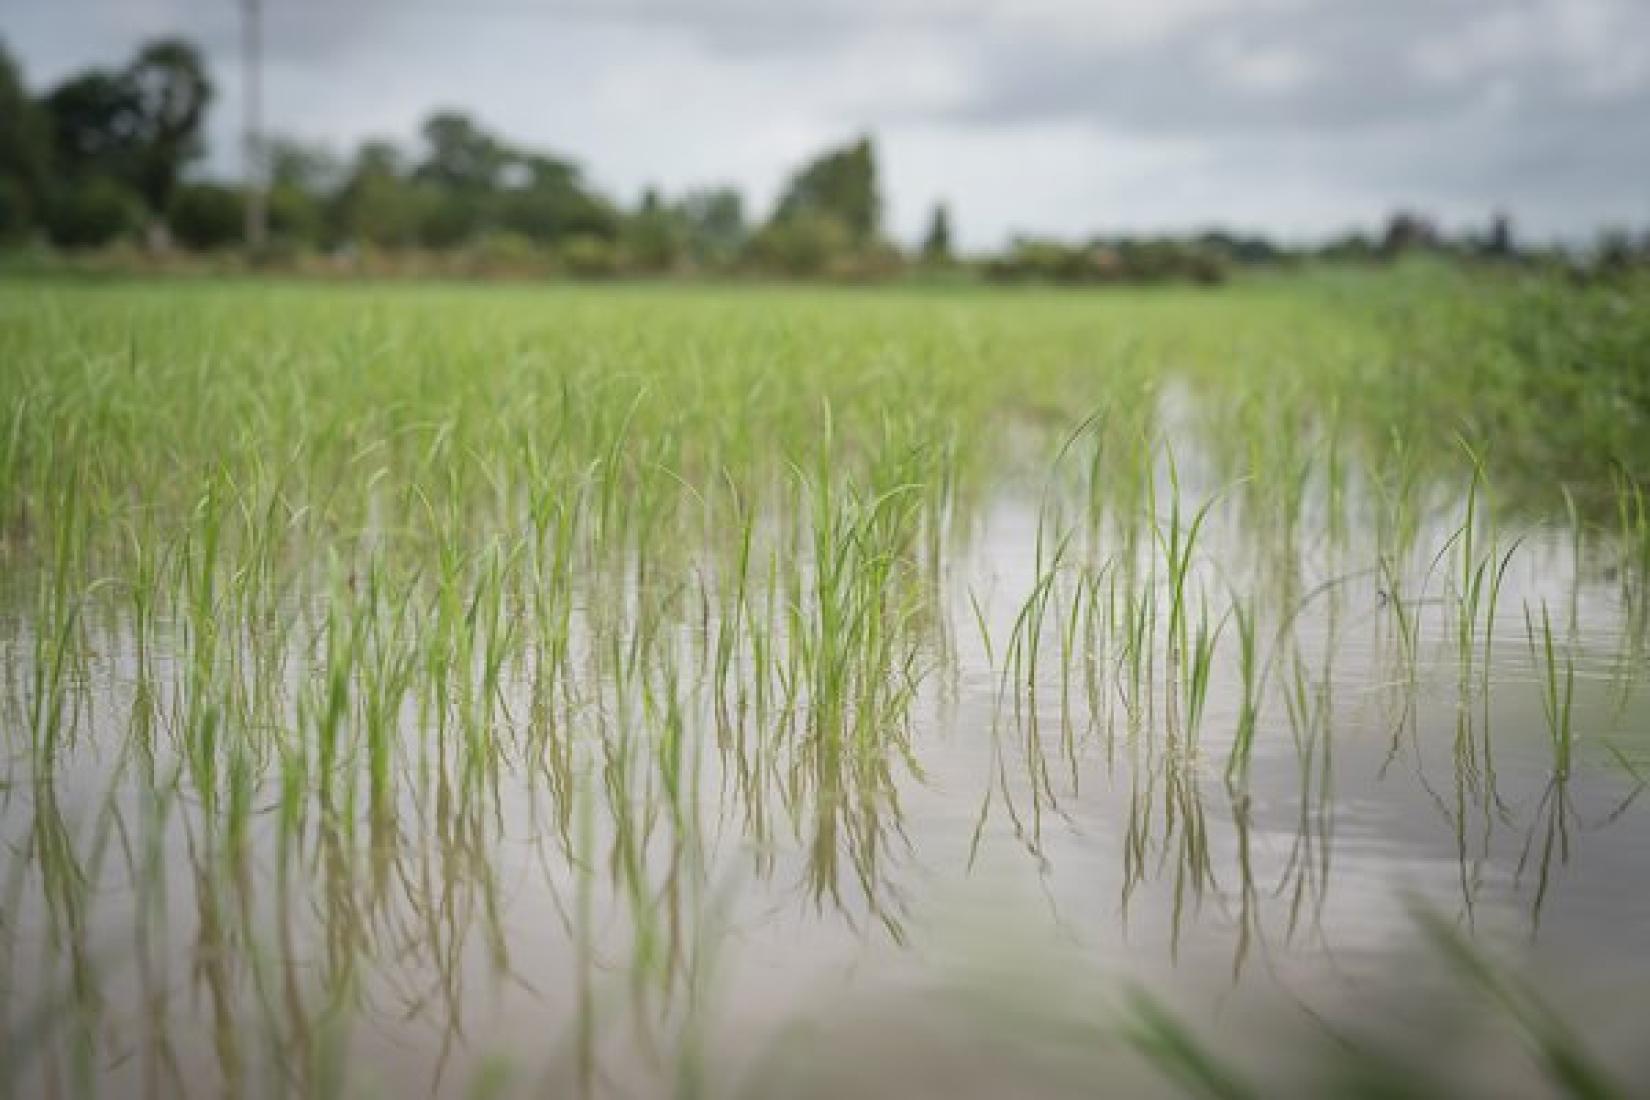 Drum seeder rice seedlings in Bago Region. Photo: ACIAR/Conor Ashleigh